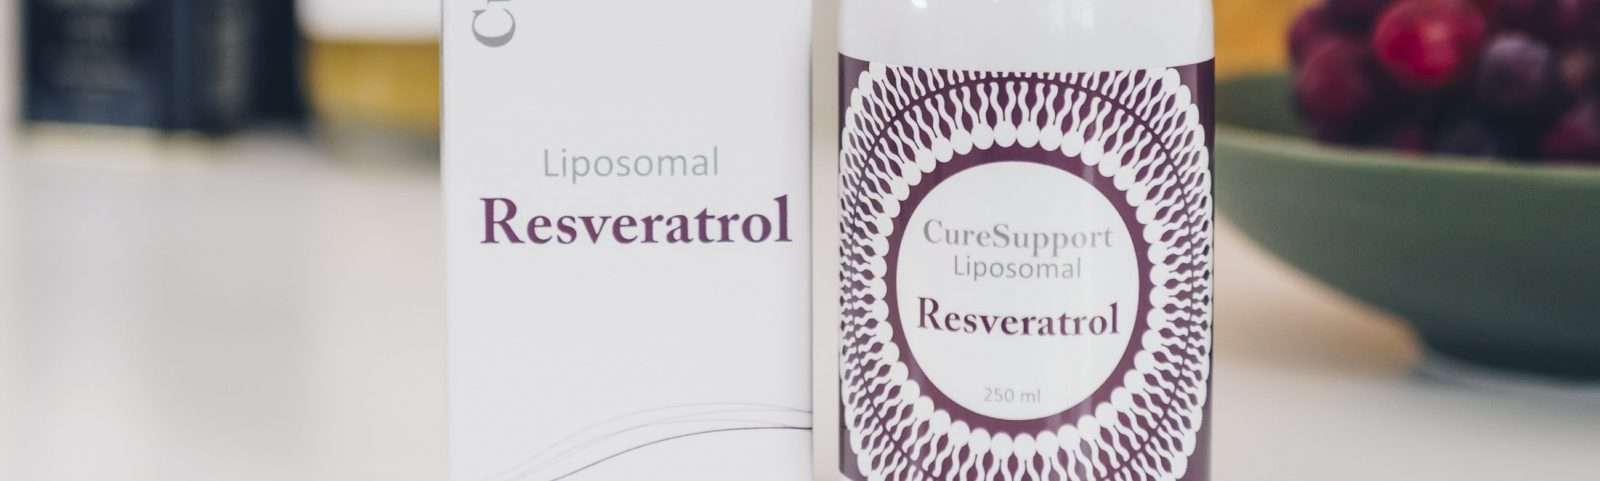 resveratrol1-scaled-aspect-ratio-1330-400-1600x481